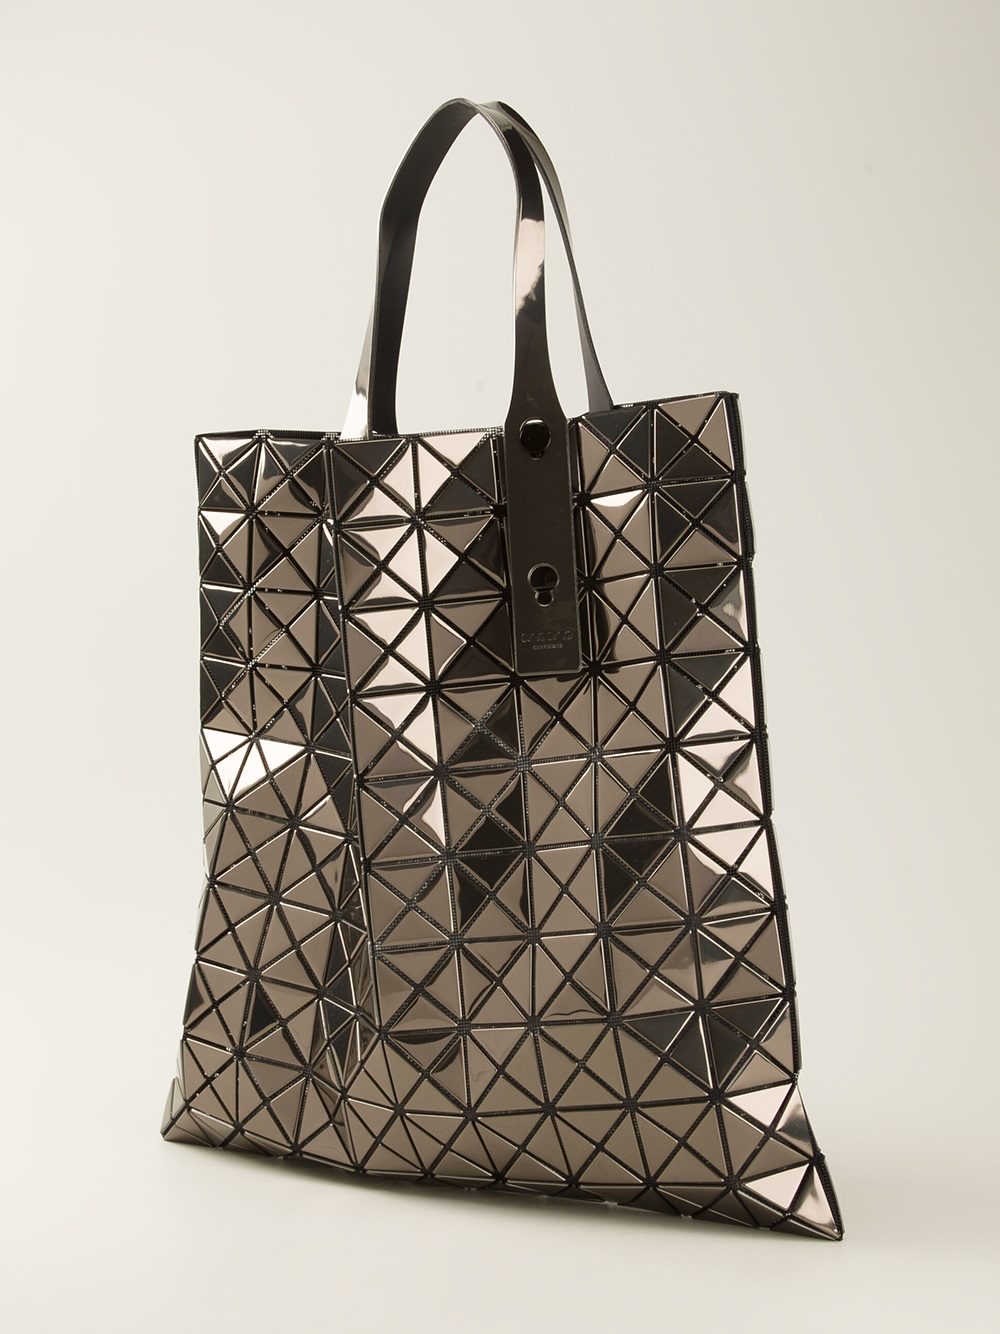 Lyst - Bao Bao Issey Miyake Geometric Panel Tote Bag in Metallic